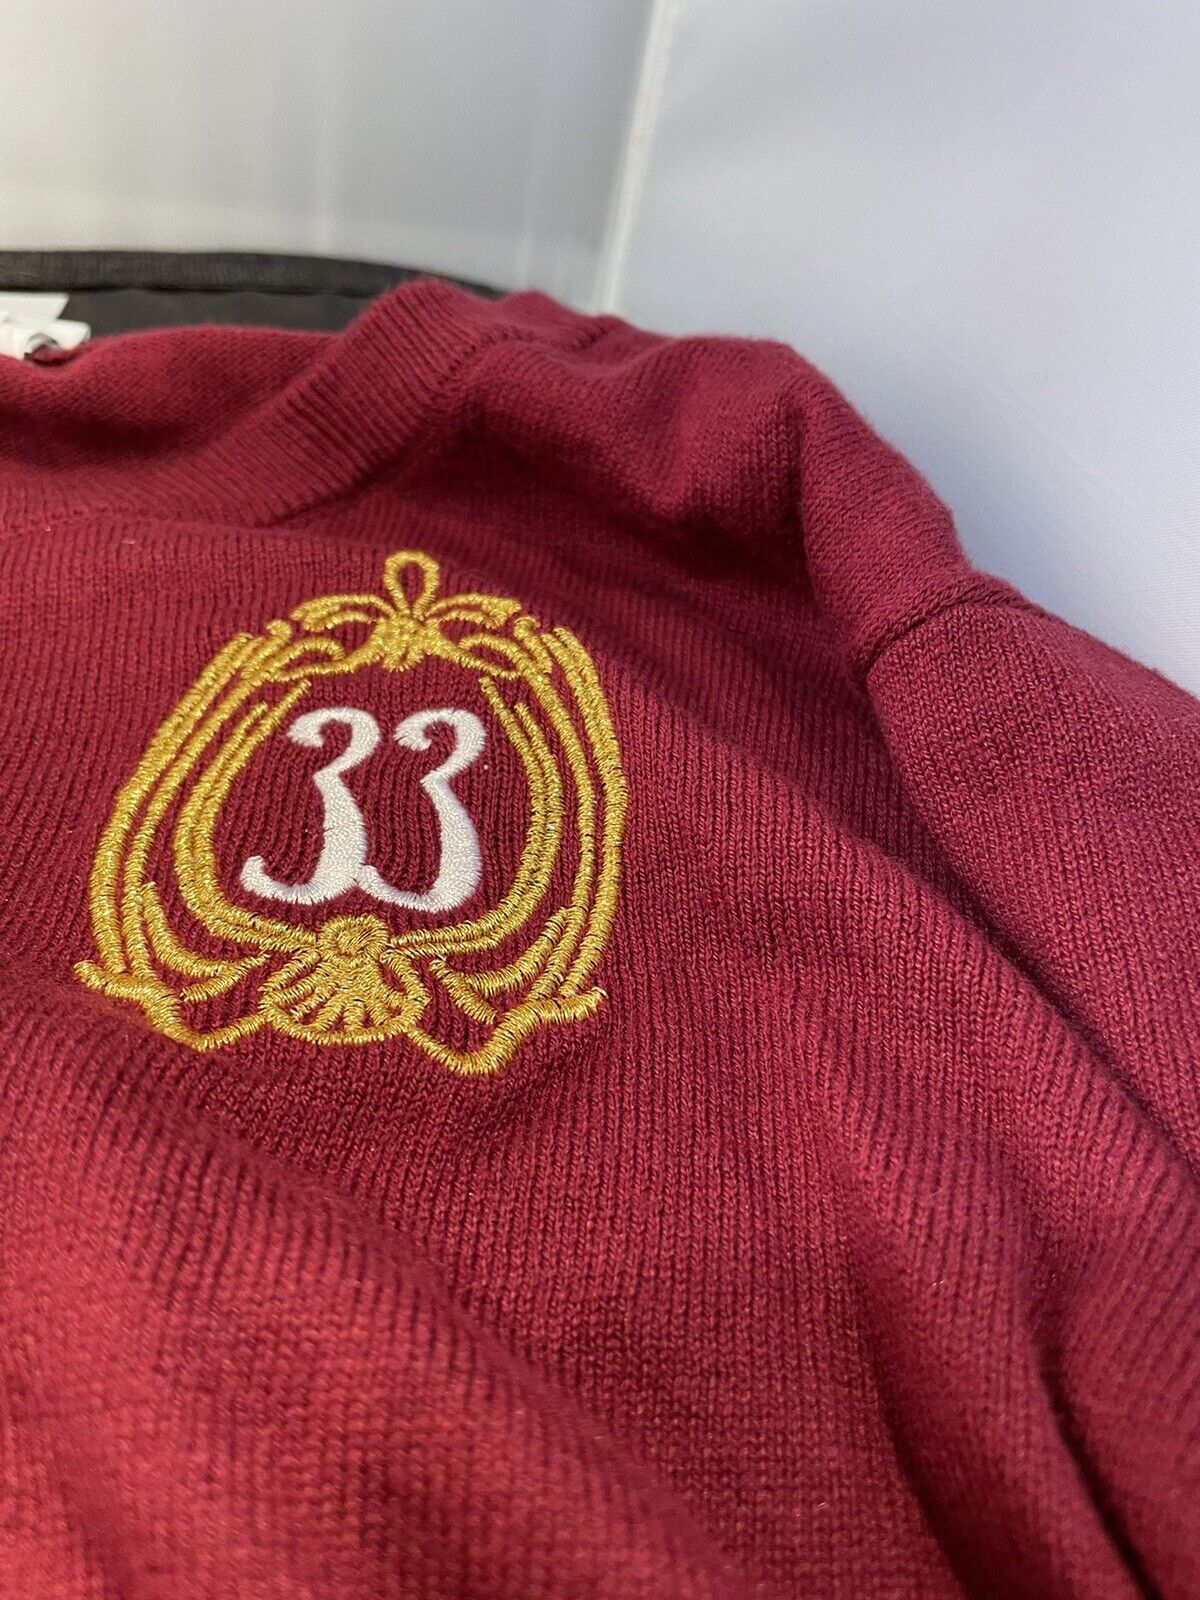 Disneyland Club33, Very Rare Red Sweater Size 2X